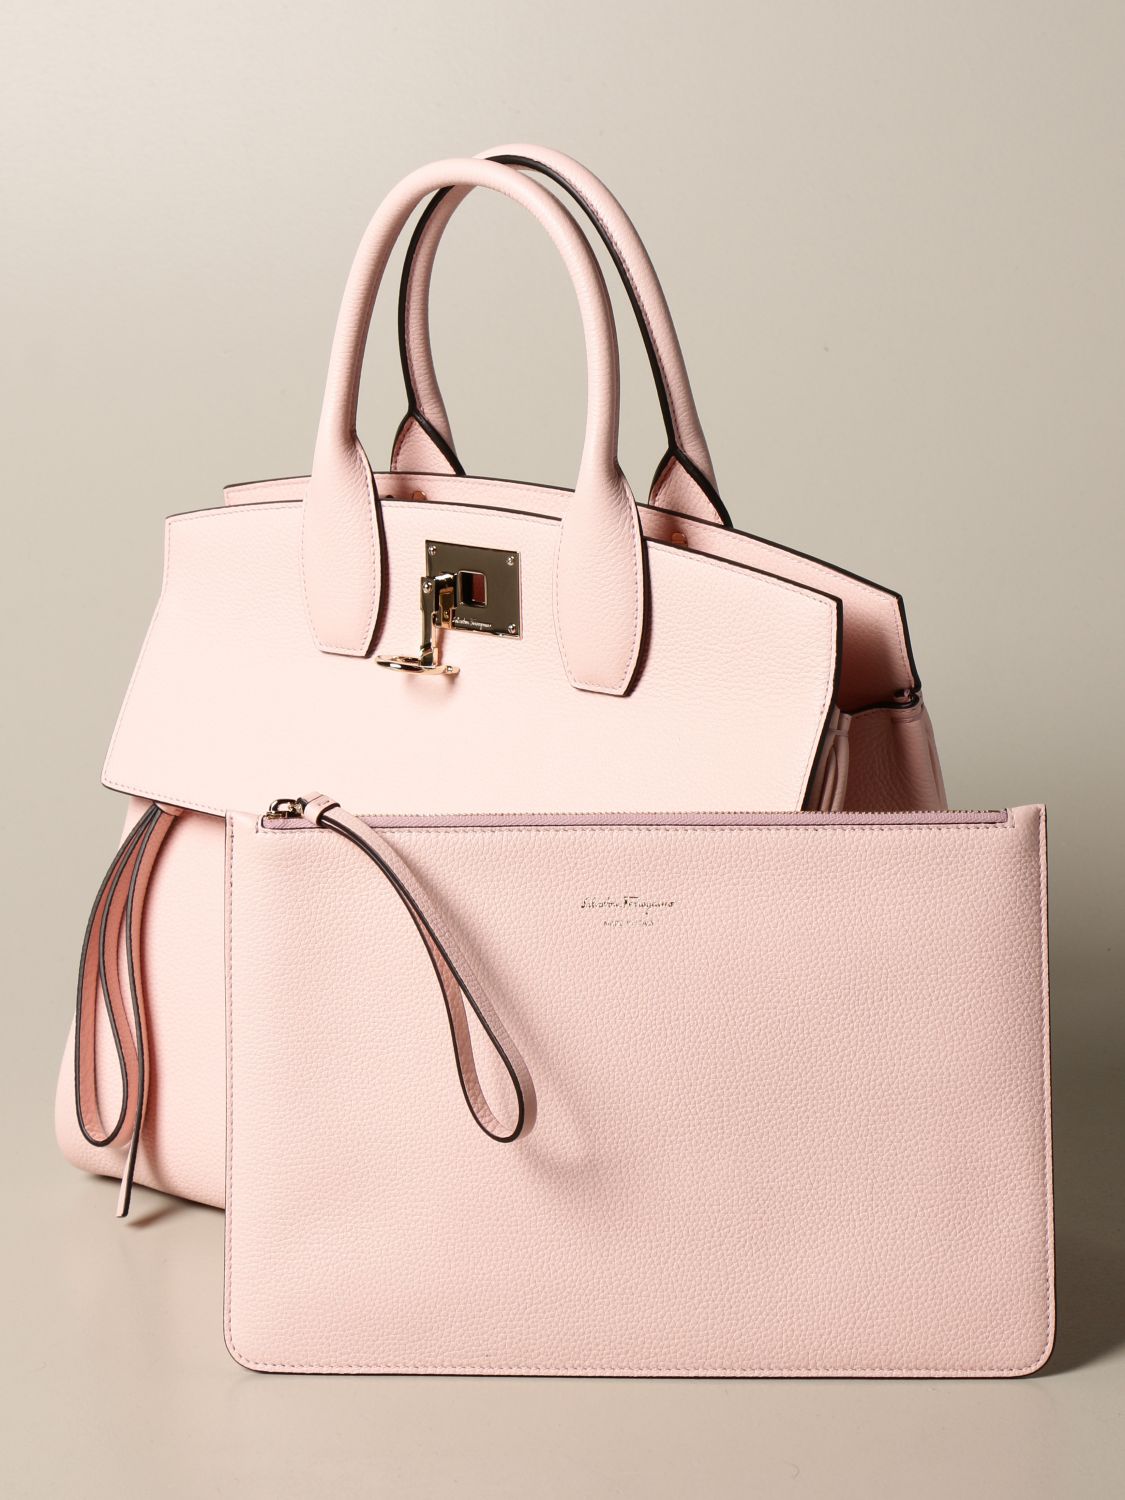 FERRAGAMO: The Studio bag in textured leather - Pink  Ferragamo handbag  21H167 740836 online at